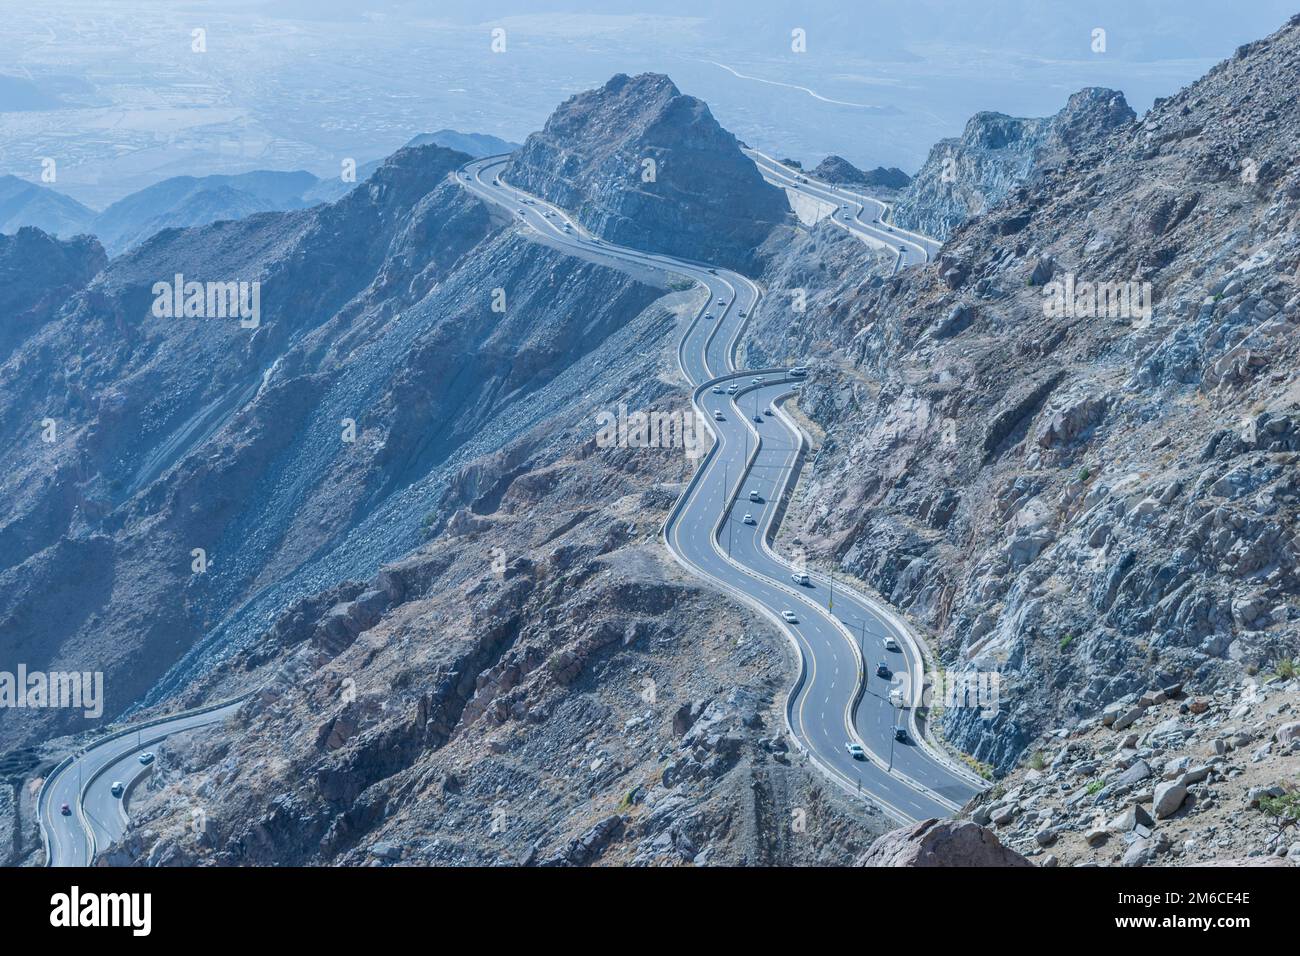 Al Hada Mountain in Taif City, Saudi Arabia with Beautiful View of Mountains and Al Hada road inbetween the mountains. Stock Photo